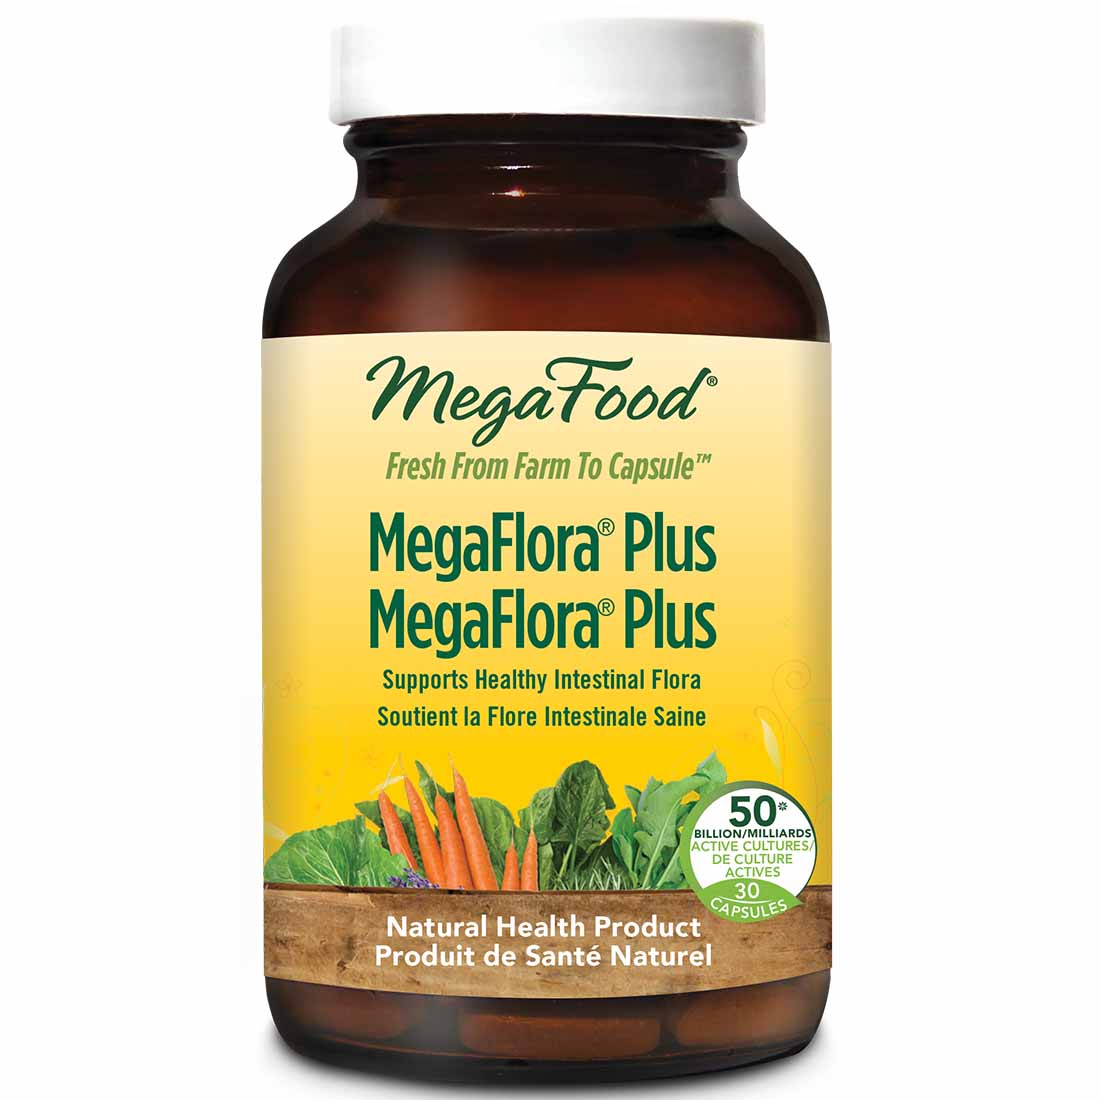 MegaFood MegaFlora Plus Probiotic Supplement 50 Billion Active Probiotics, 30 Capsules